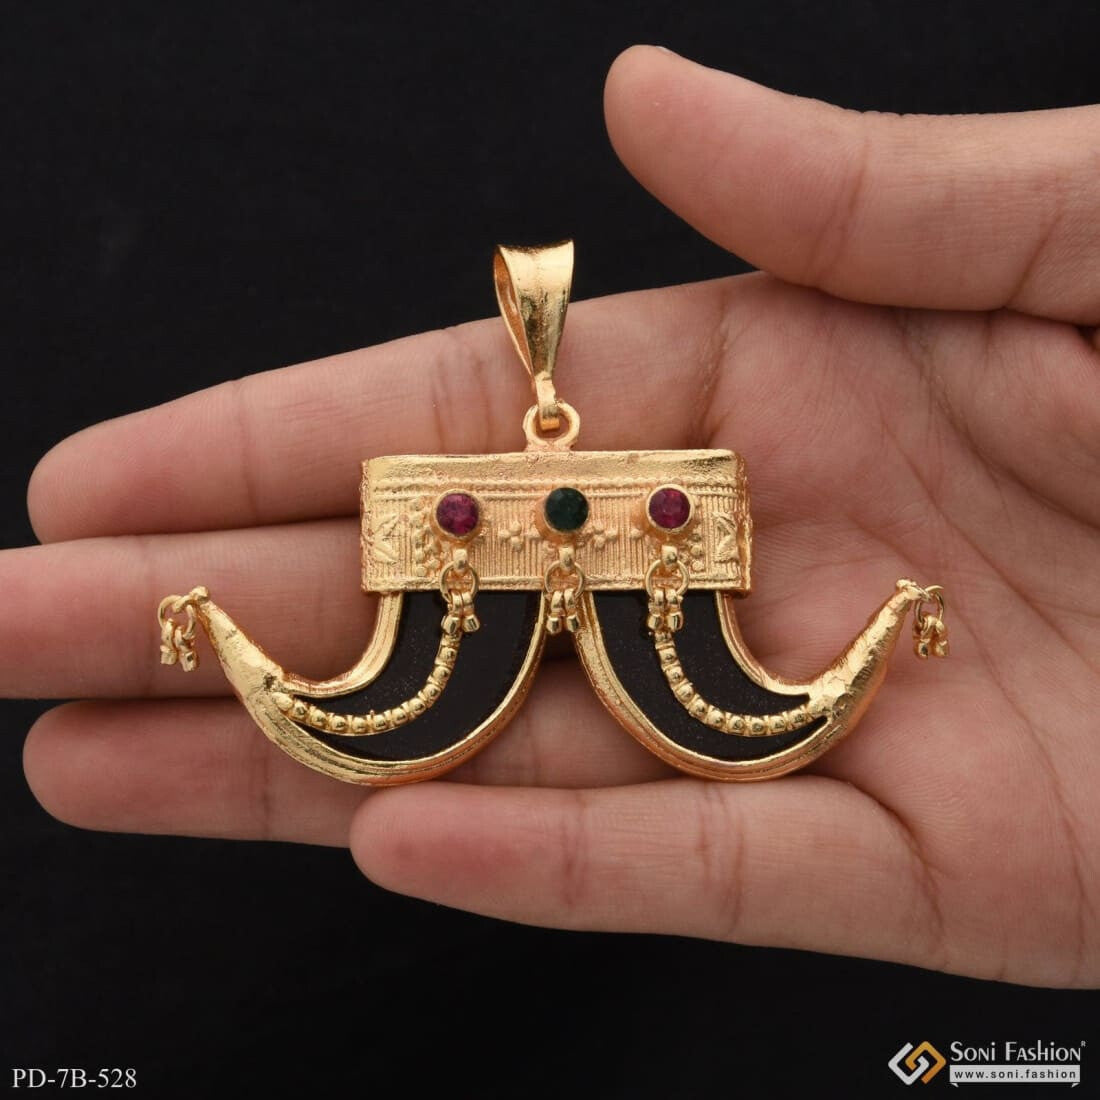 Tiger Claw Pendants Designs | Pendant design, Nails pendant, Royal jewelry